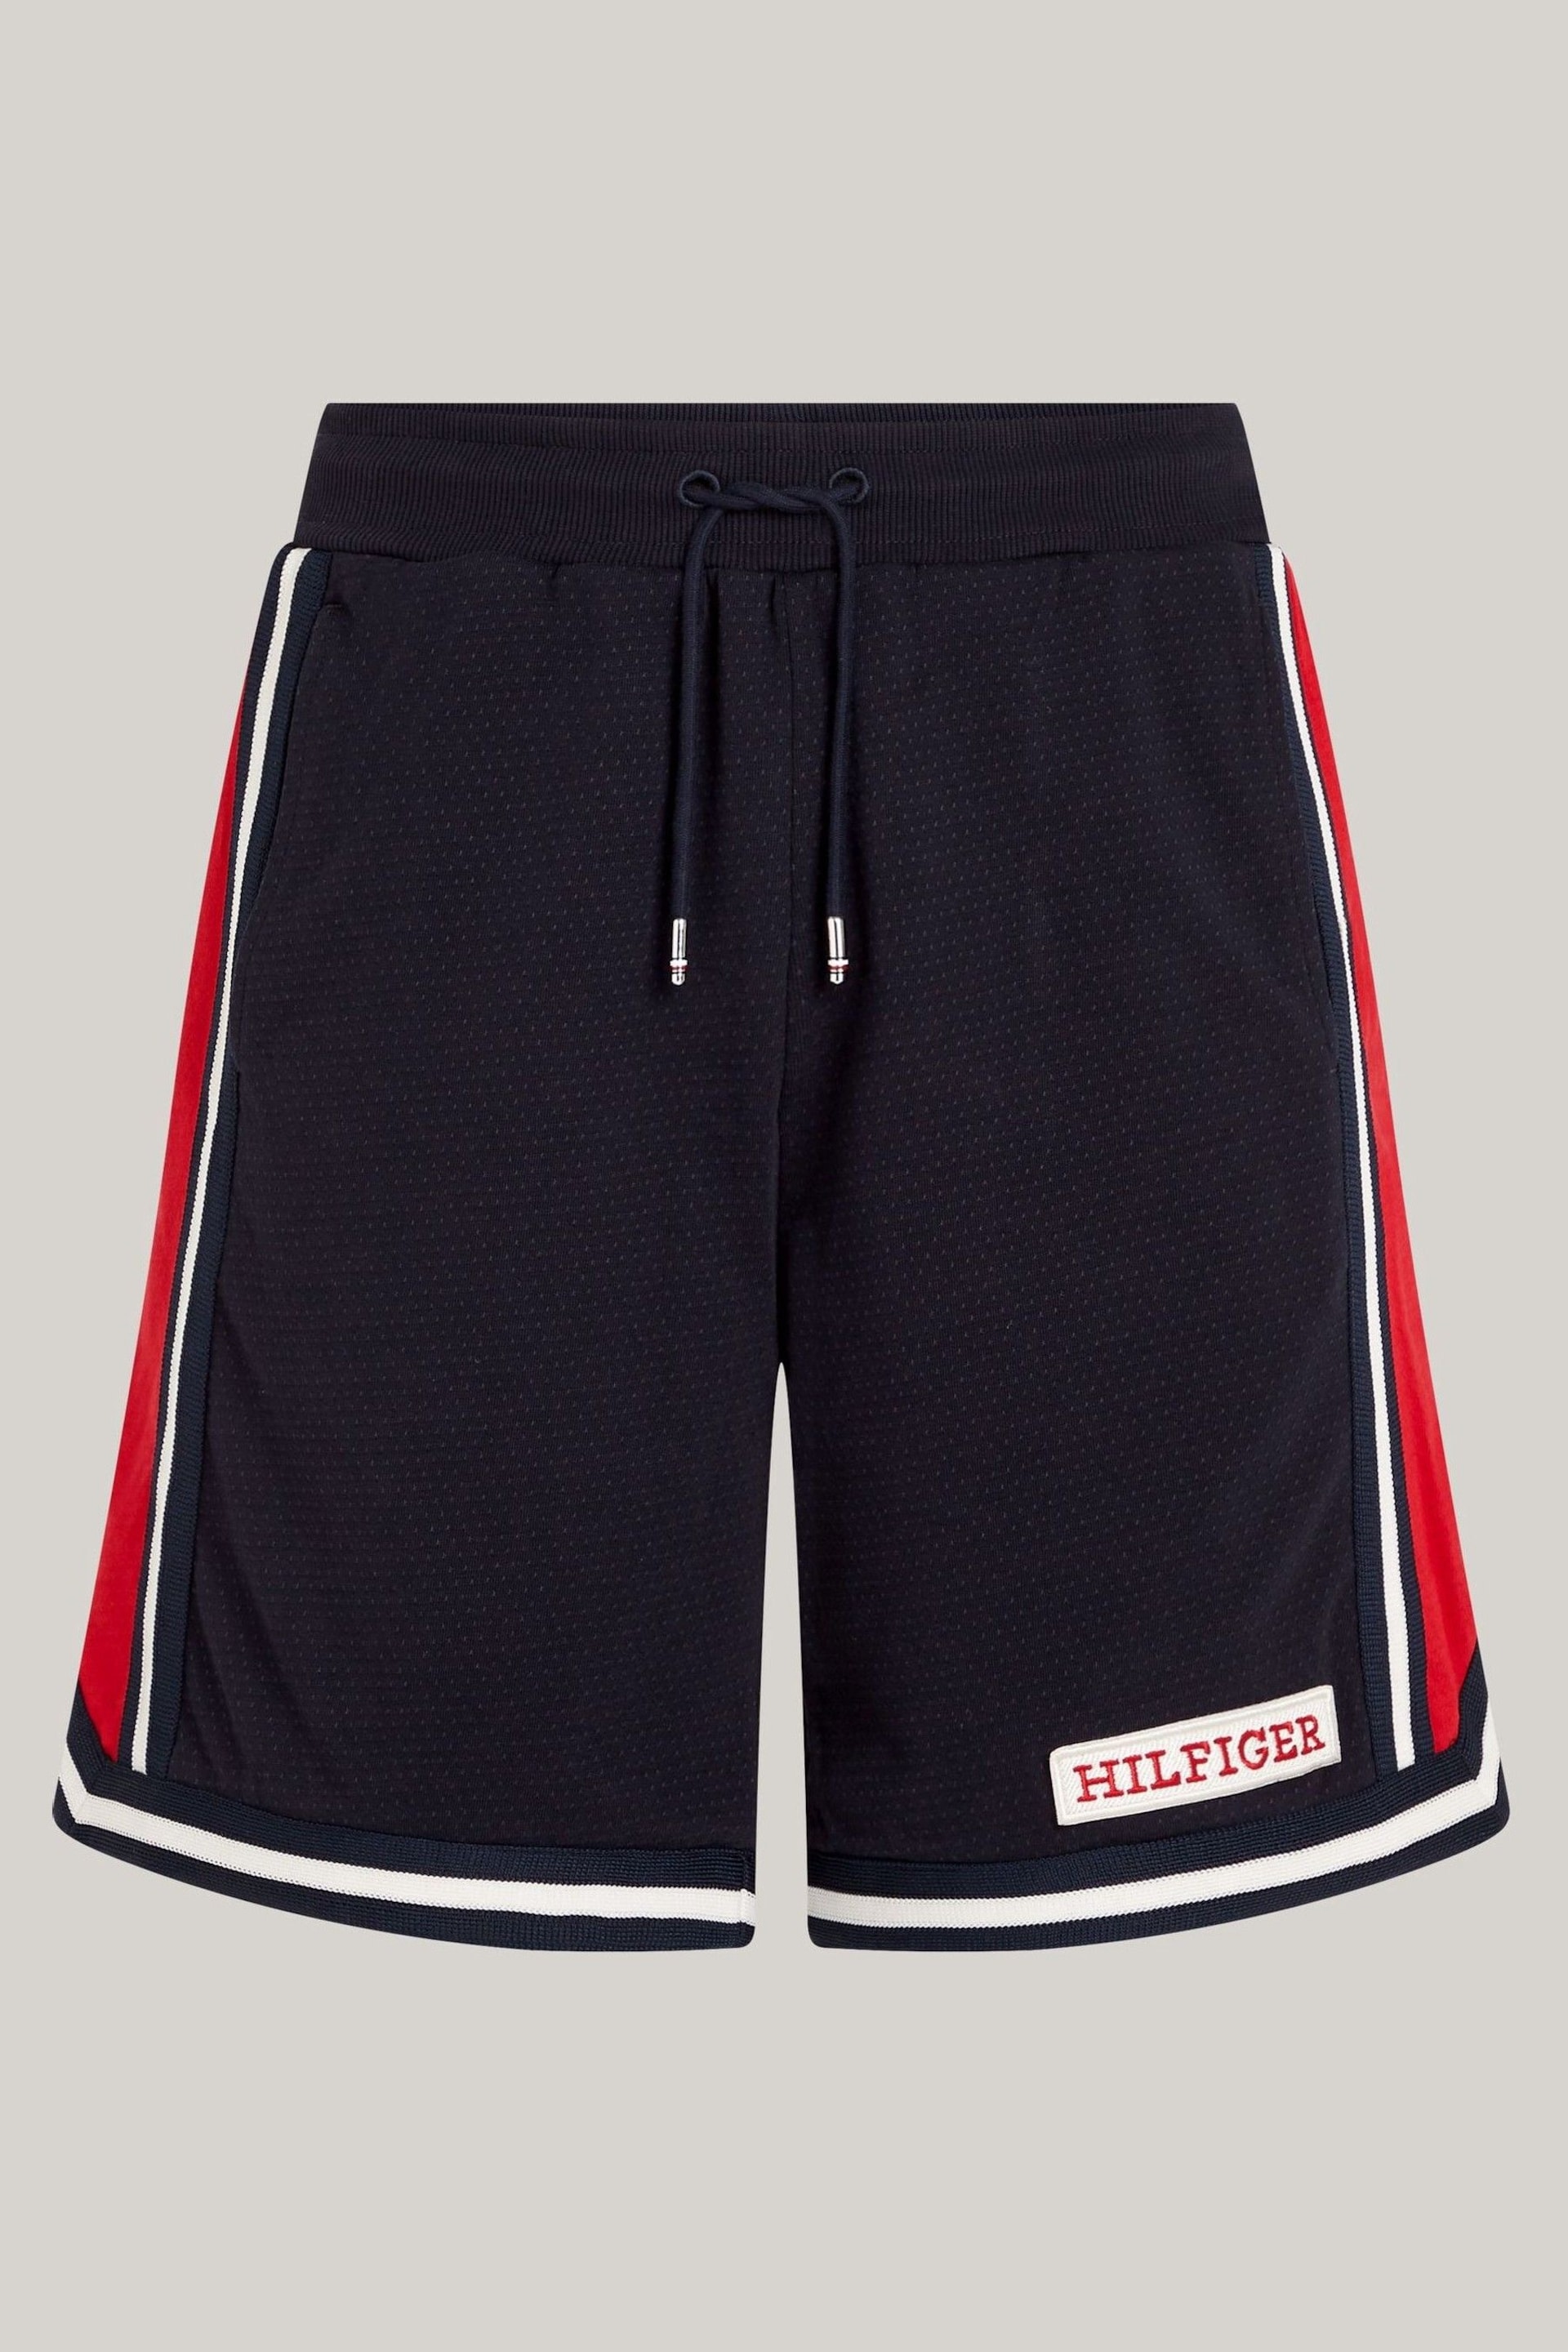 Tommy Hilfiger Black Sport Monotype Sweat Shorts - Image 4 of 6